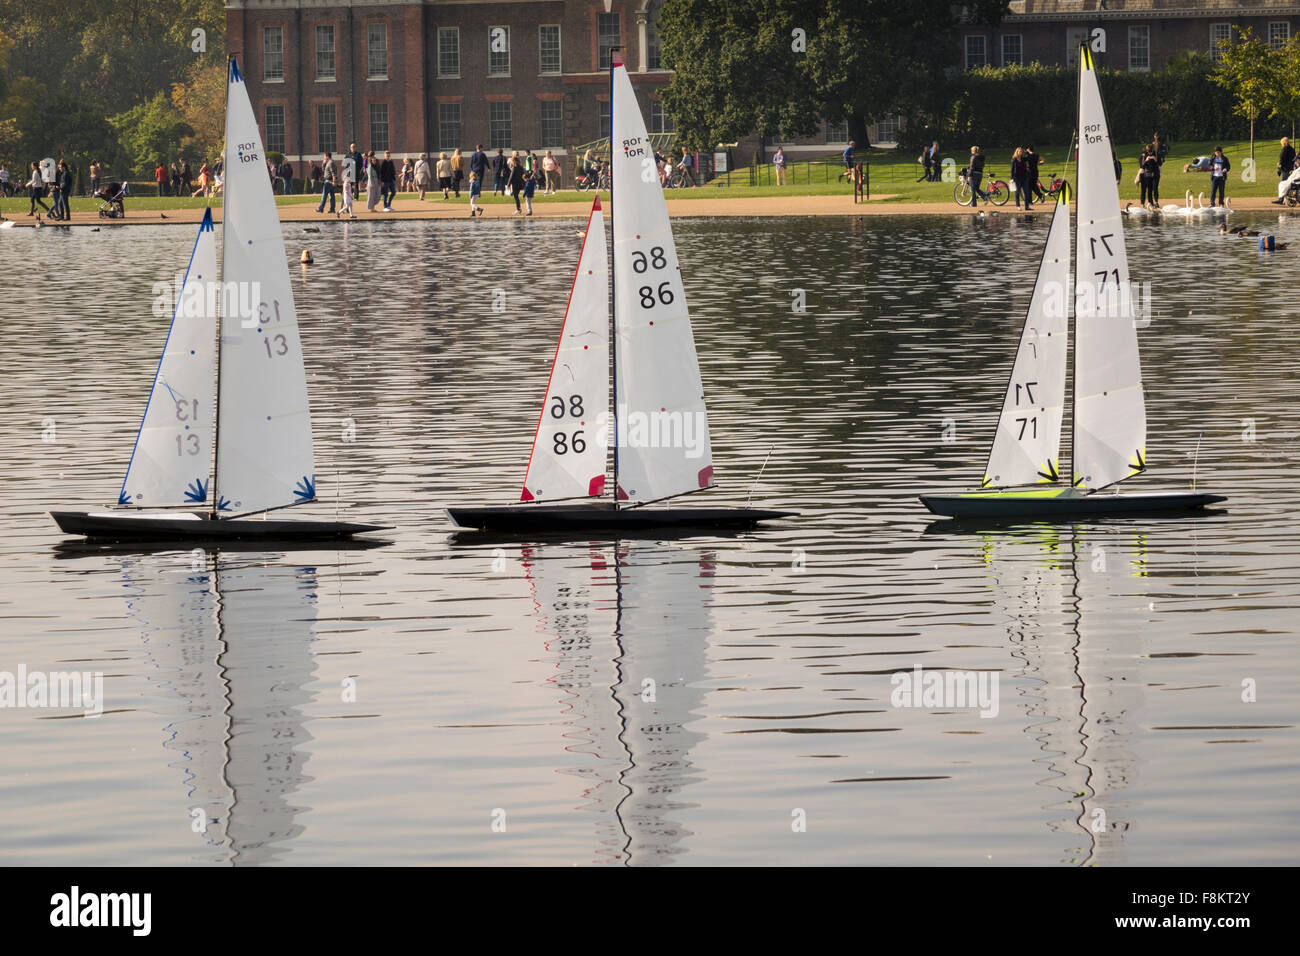 Model yachts race across Round Pond in Kensington Gardens, London, England Stock Photo